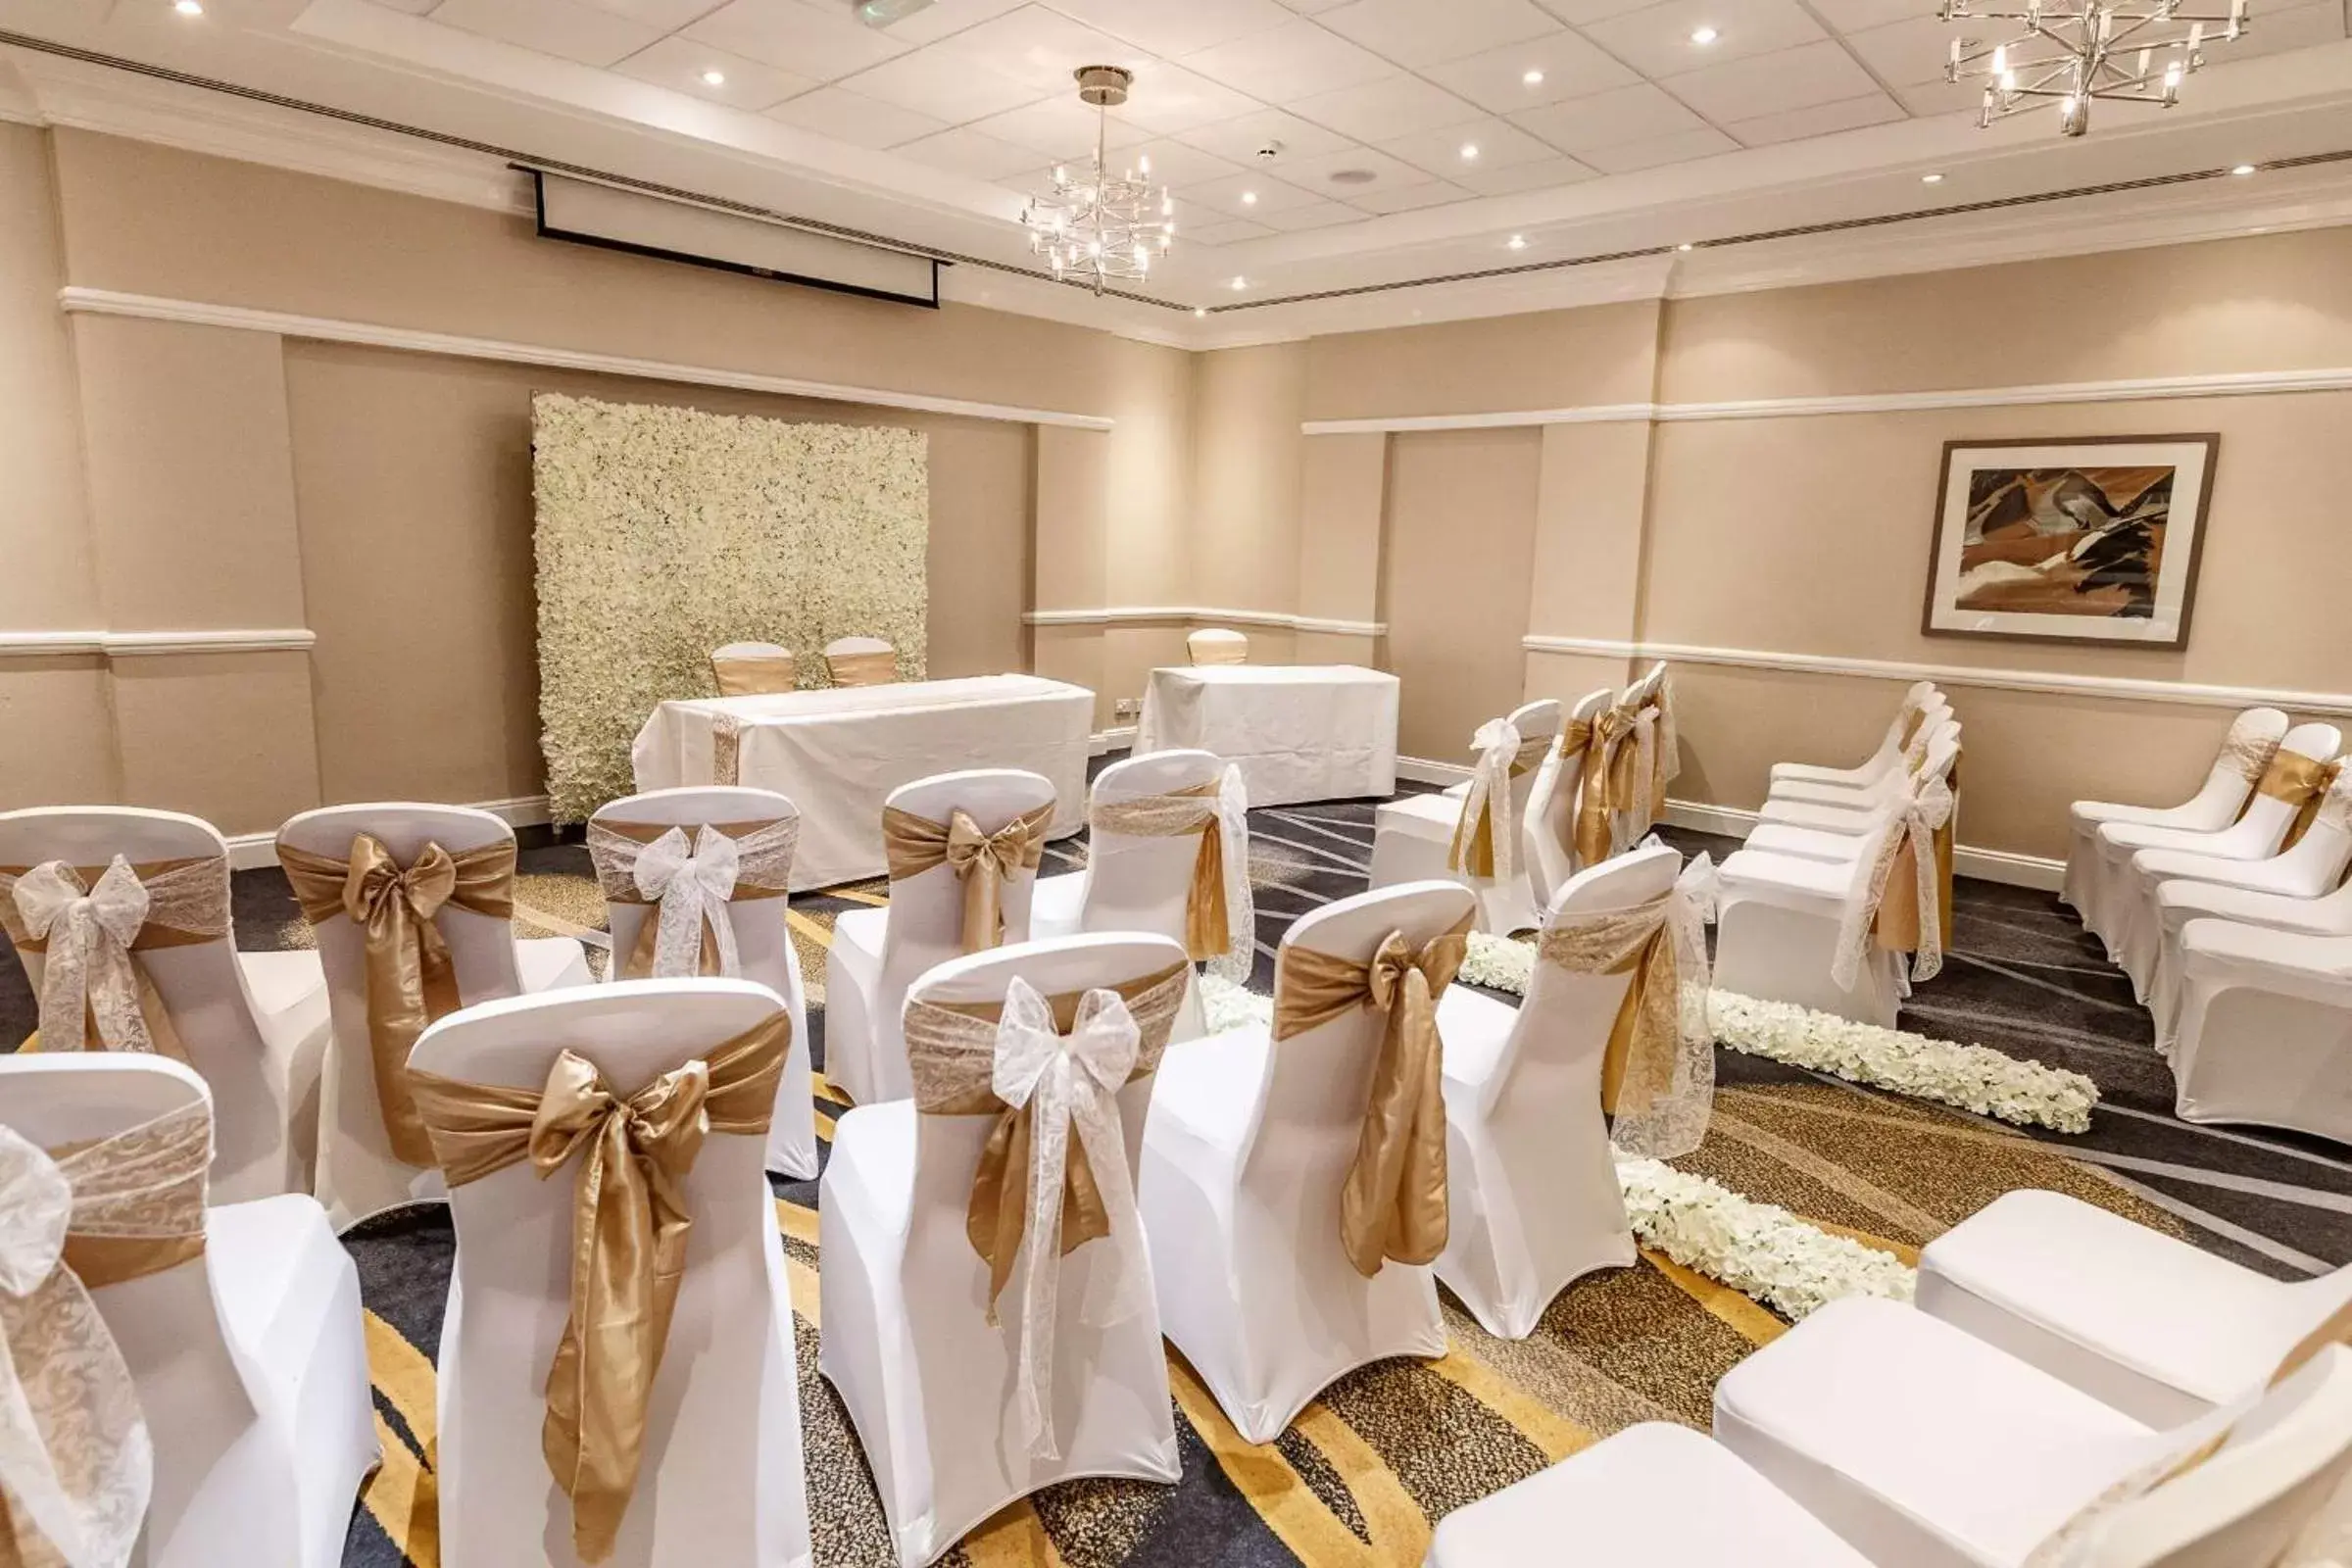 Banquet/Function facilities, Banquet Facilities in Hilton Northampton Hotel